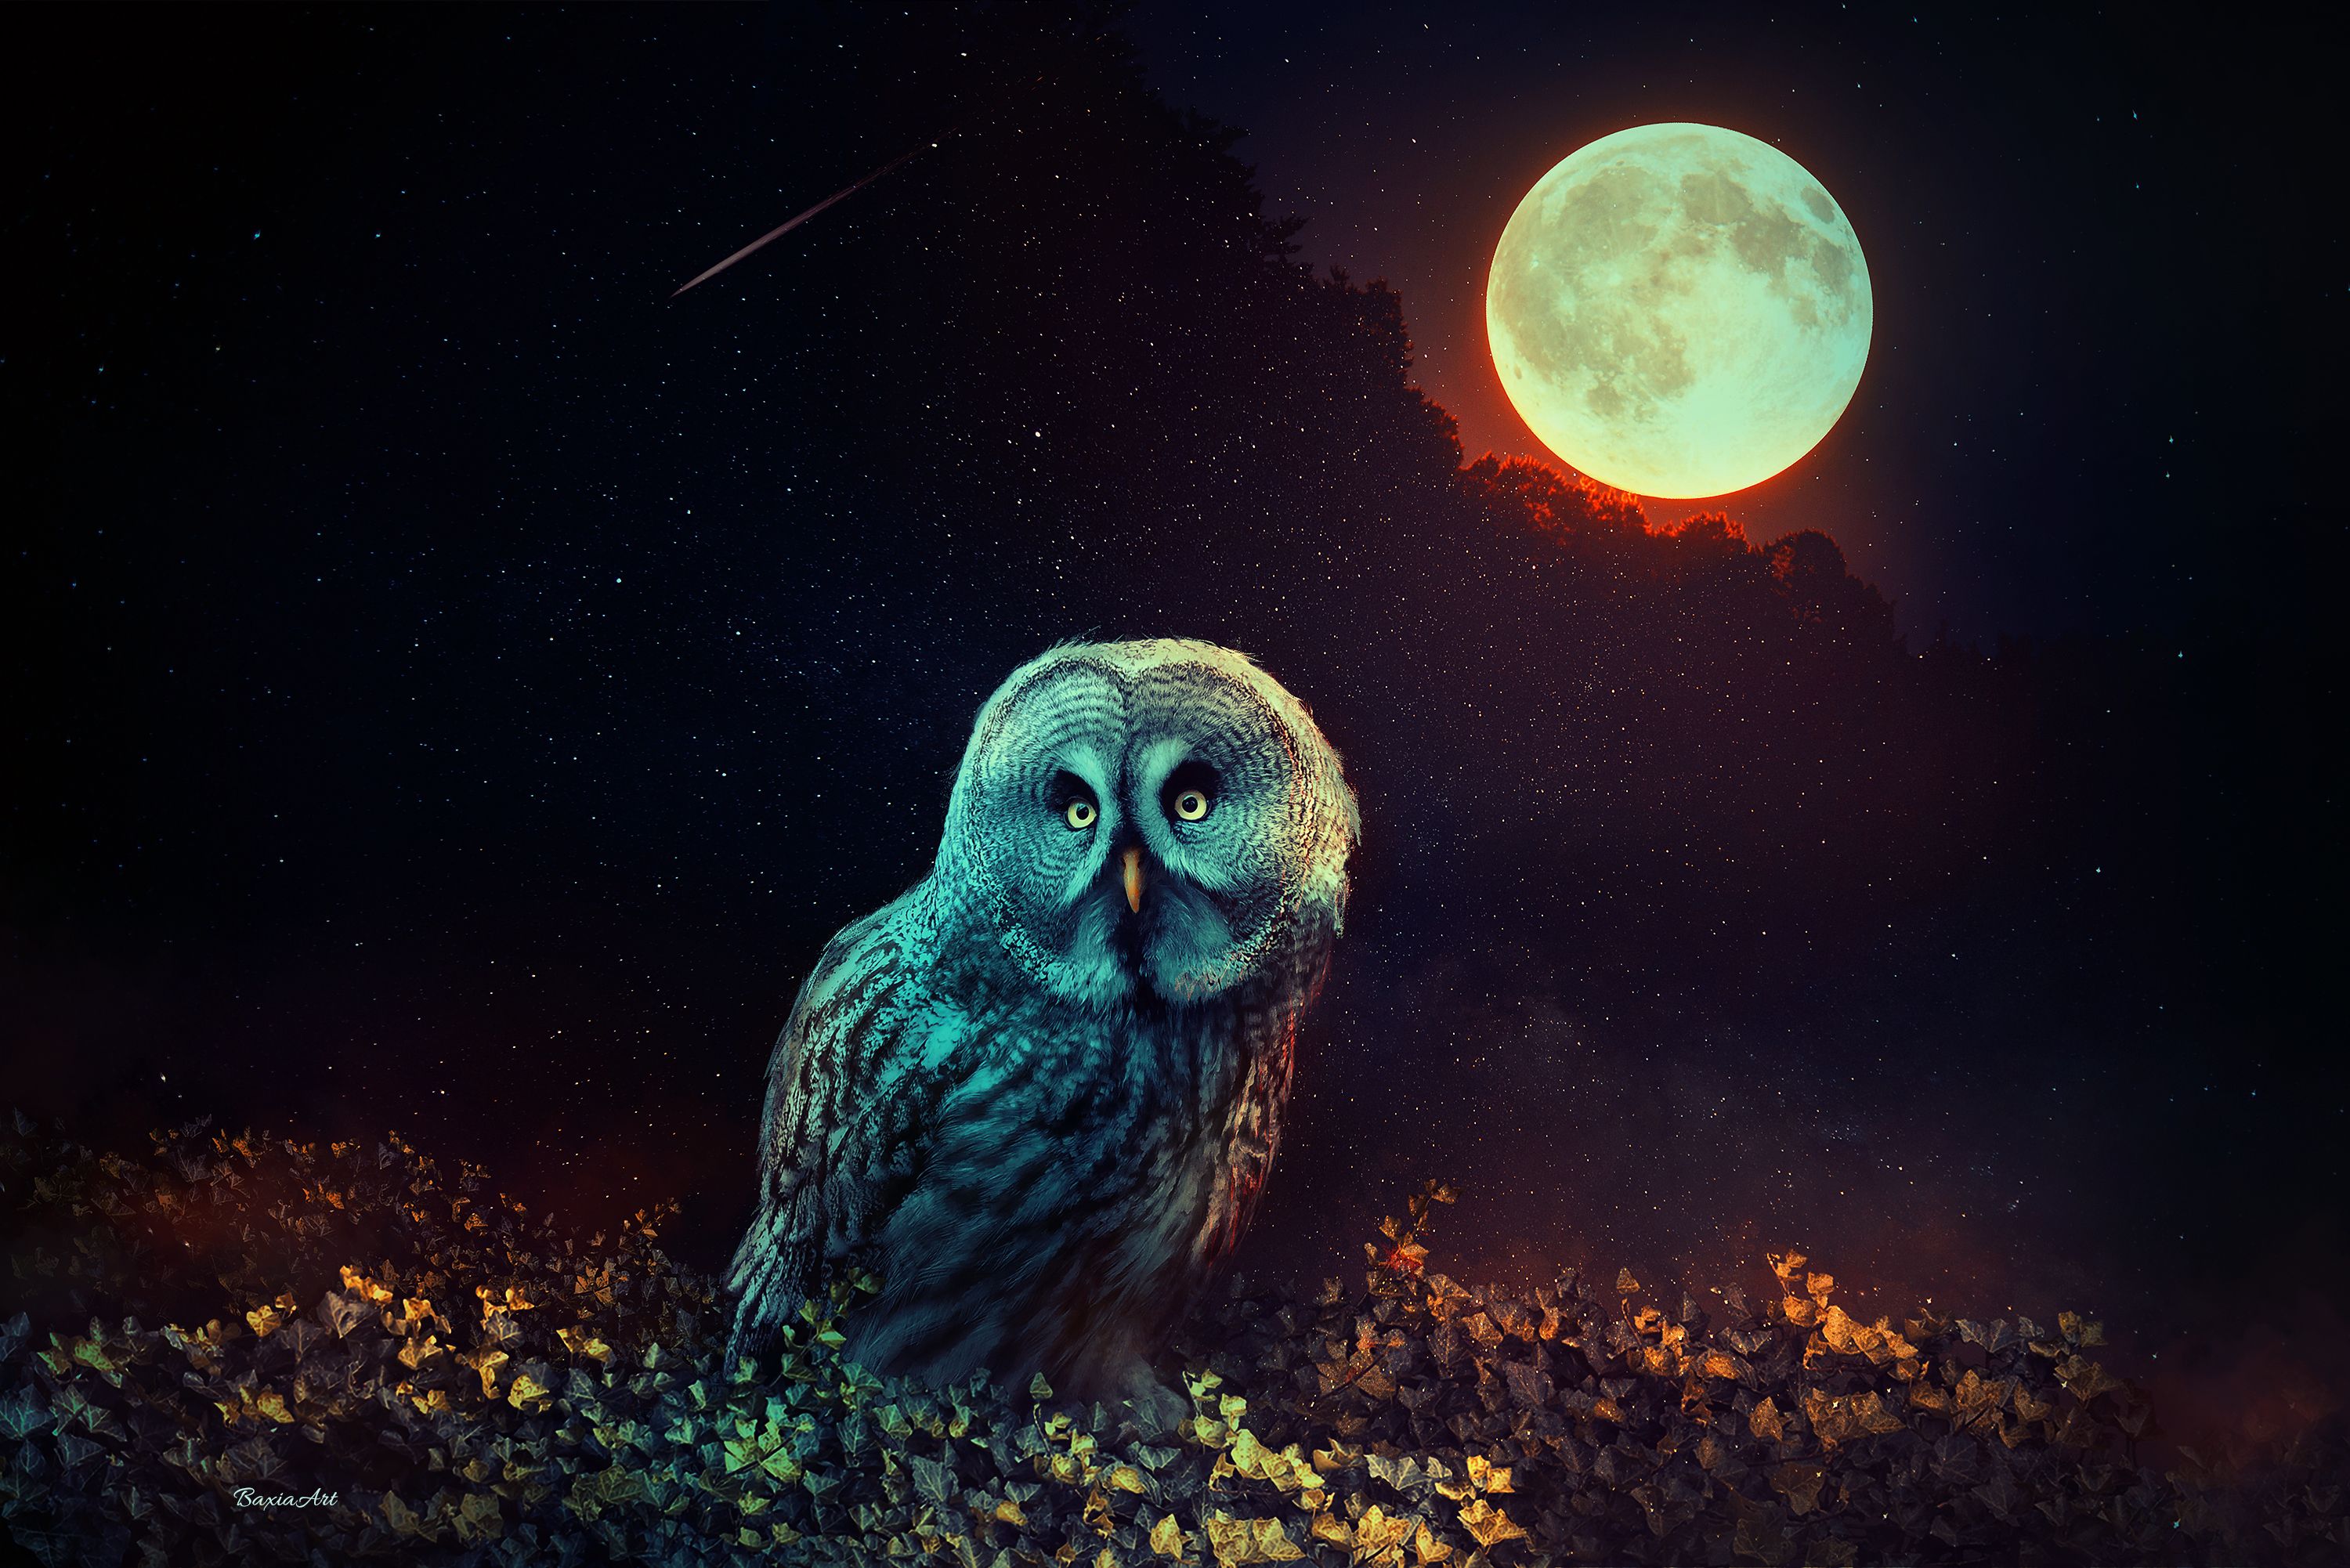 Are Aries night owls?